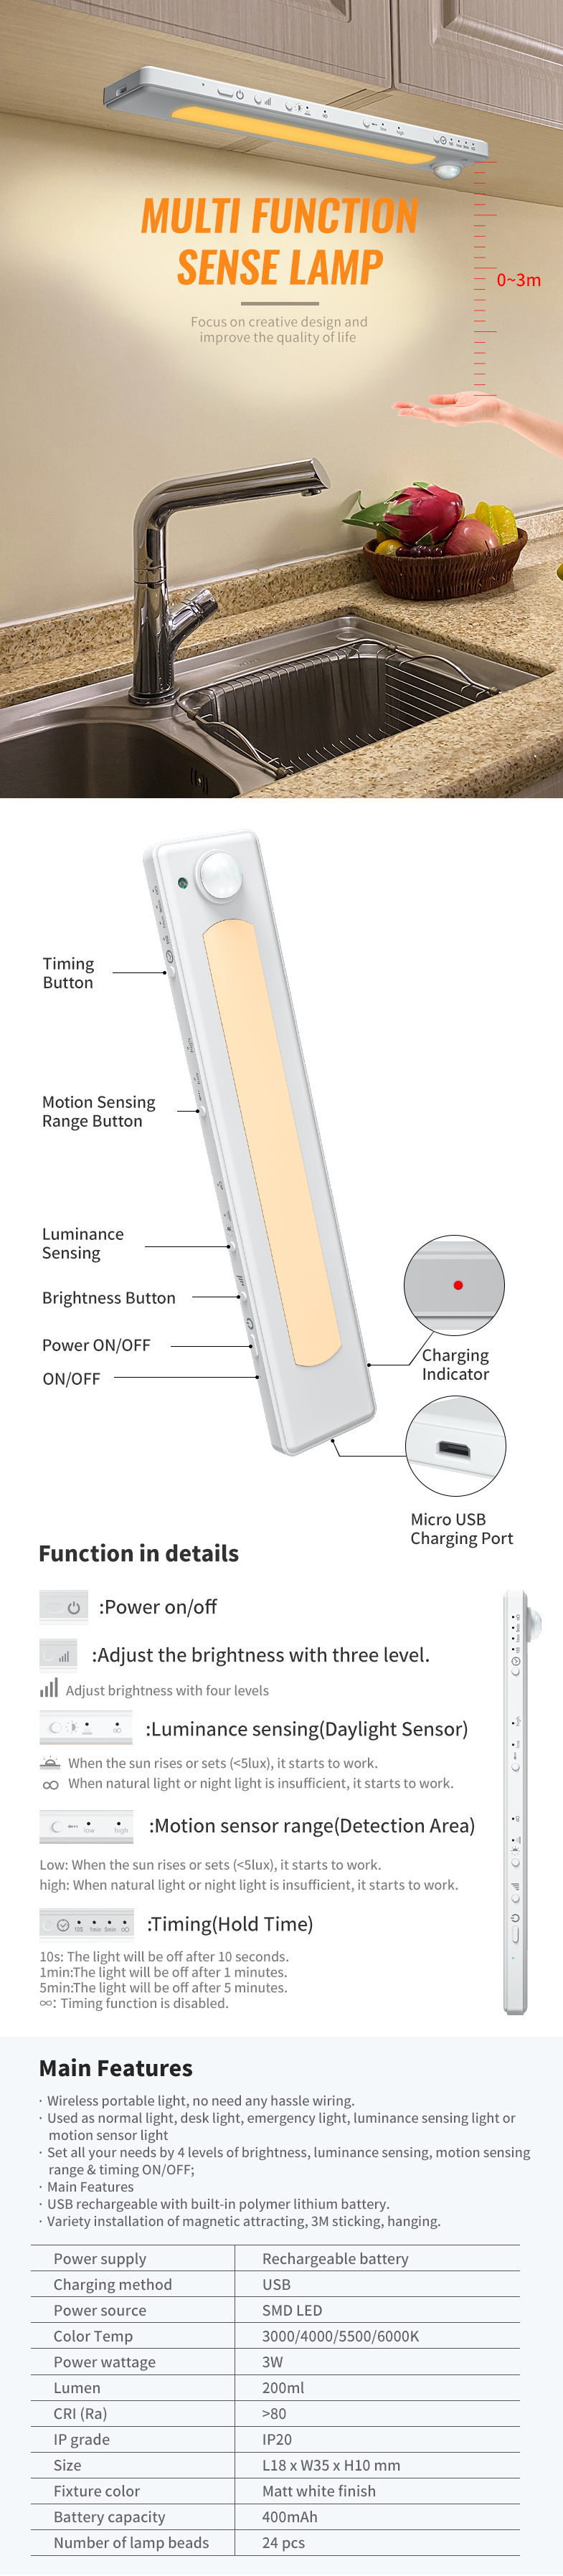 Kcasa-406-LED-Wireless-Closet-Lights-24-LED-Rechargeable-Motion-Sensor-Light-Sensor-Under-Cabinet-Li-1852846-1